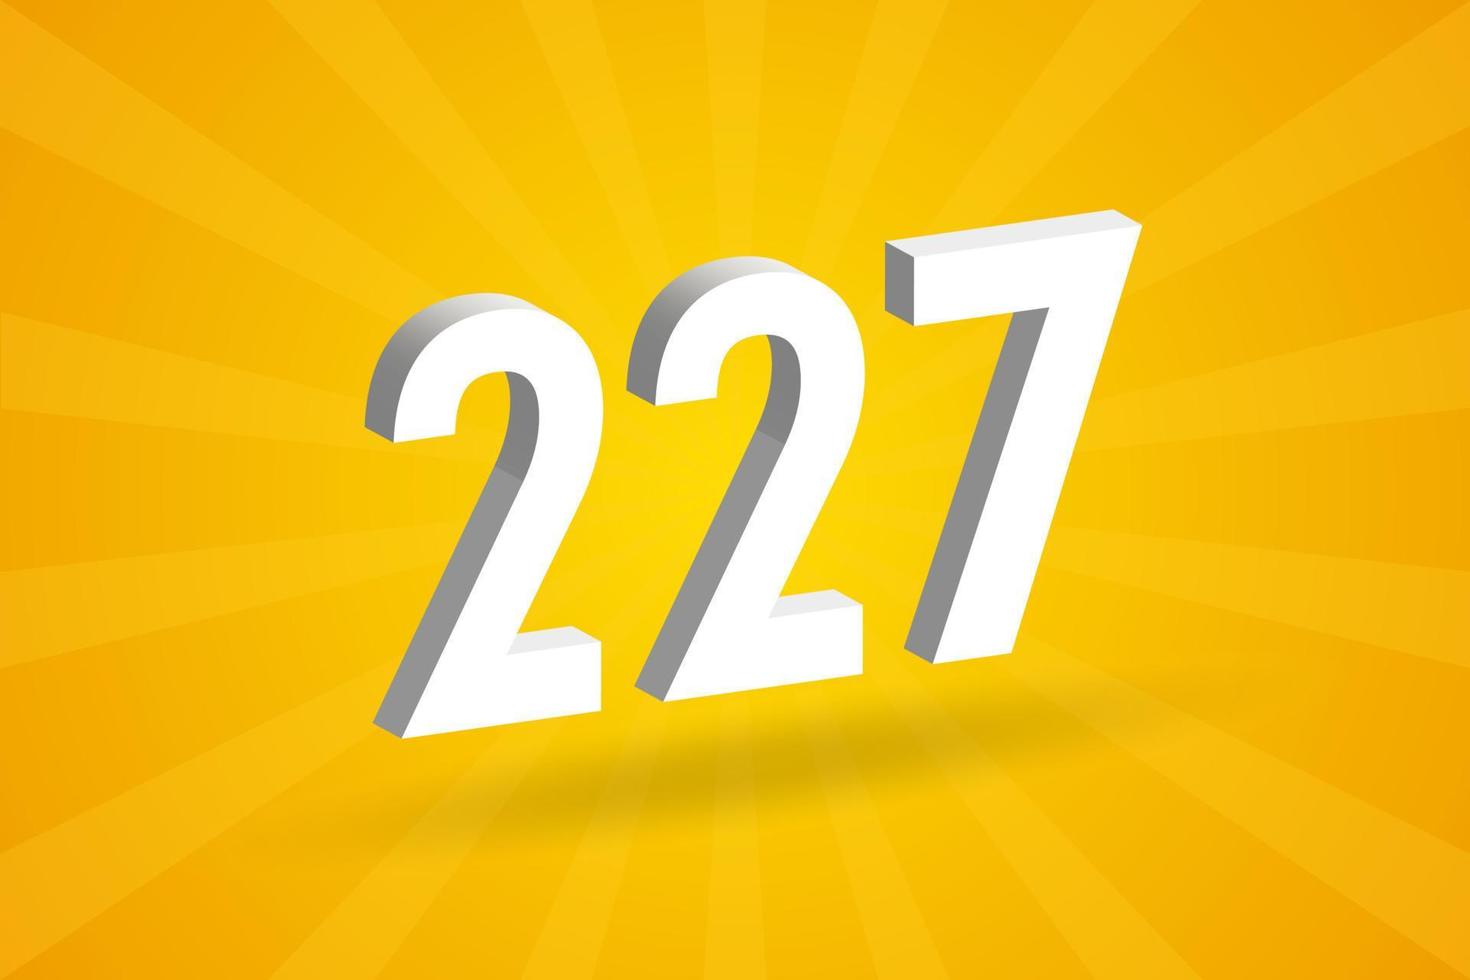 3d 227 siffra font alfabet. vit 3d siffra 227 med gul bakgrund vektor